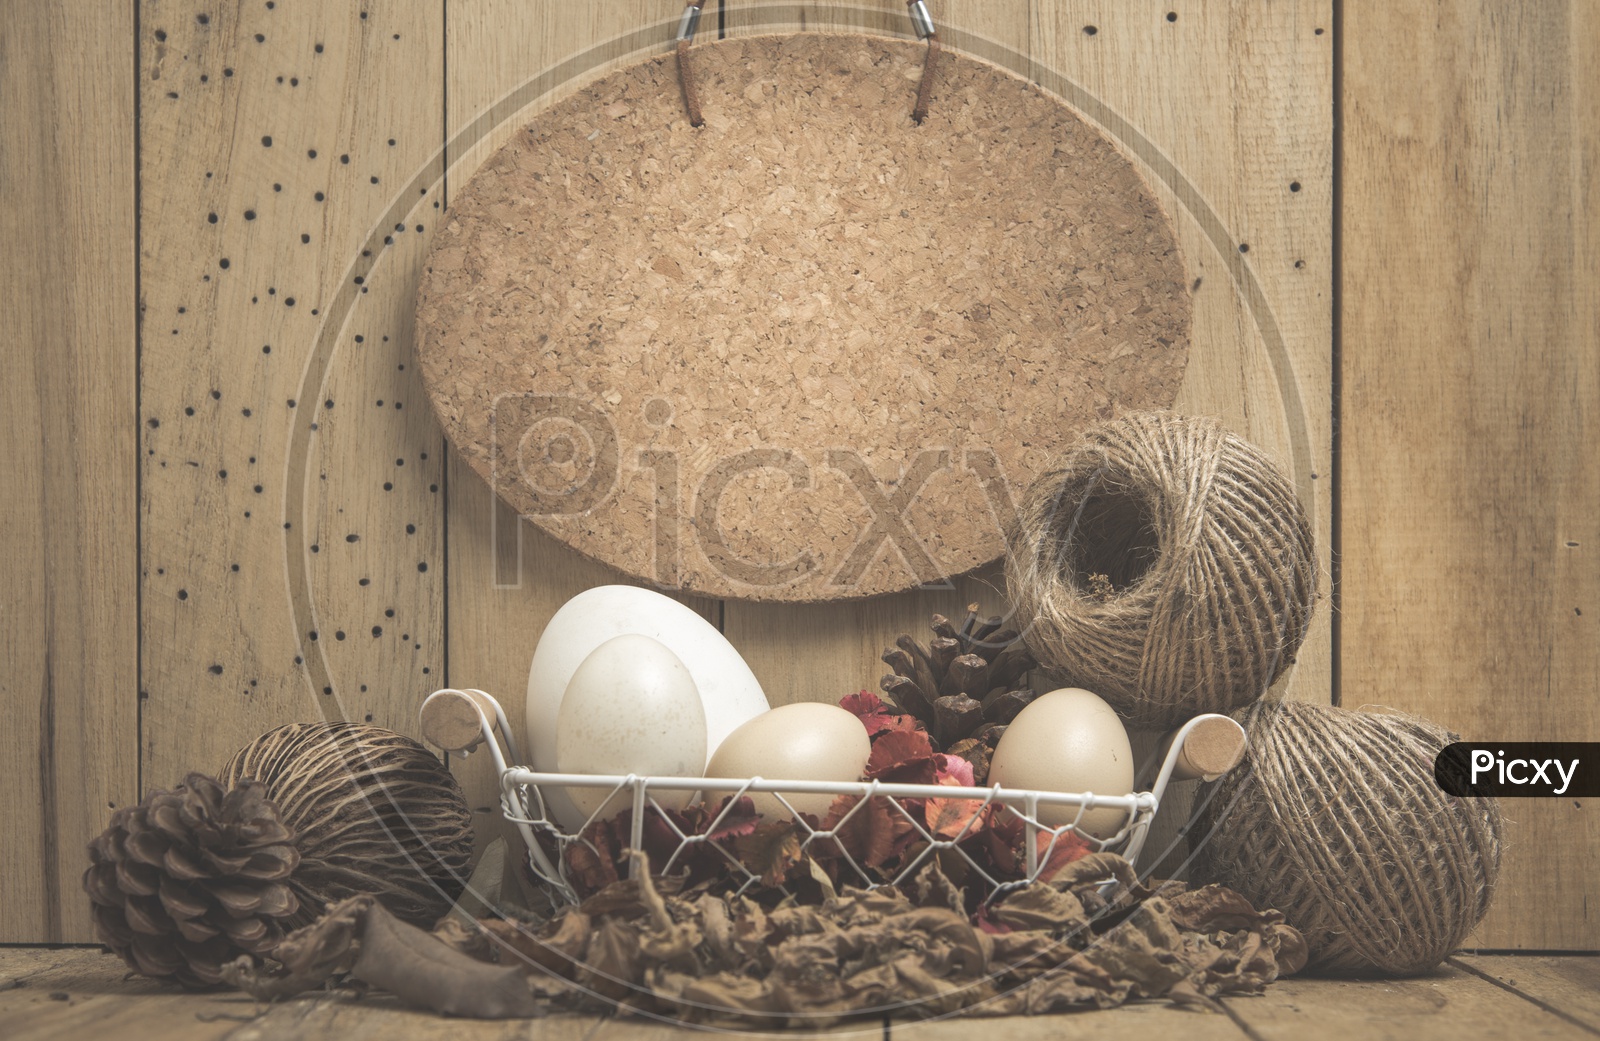 Eggs In a Basket Over Vintage Wood Background